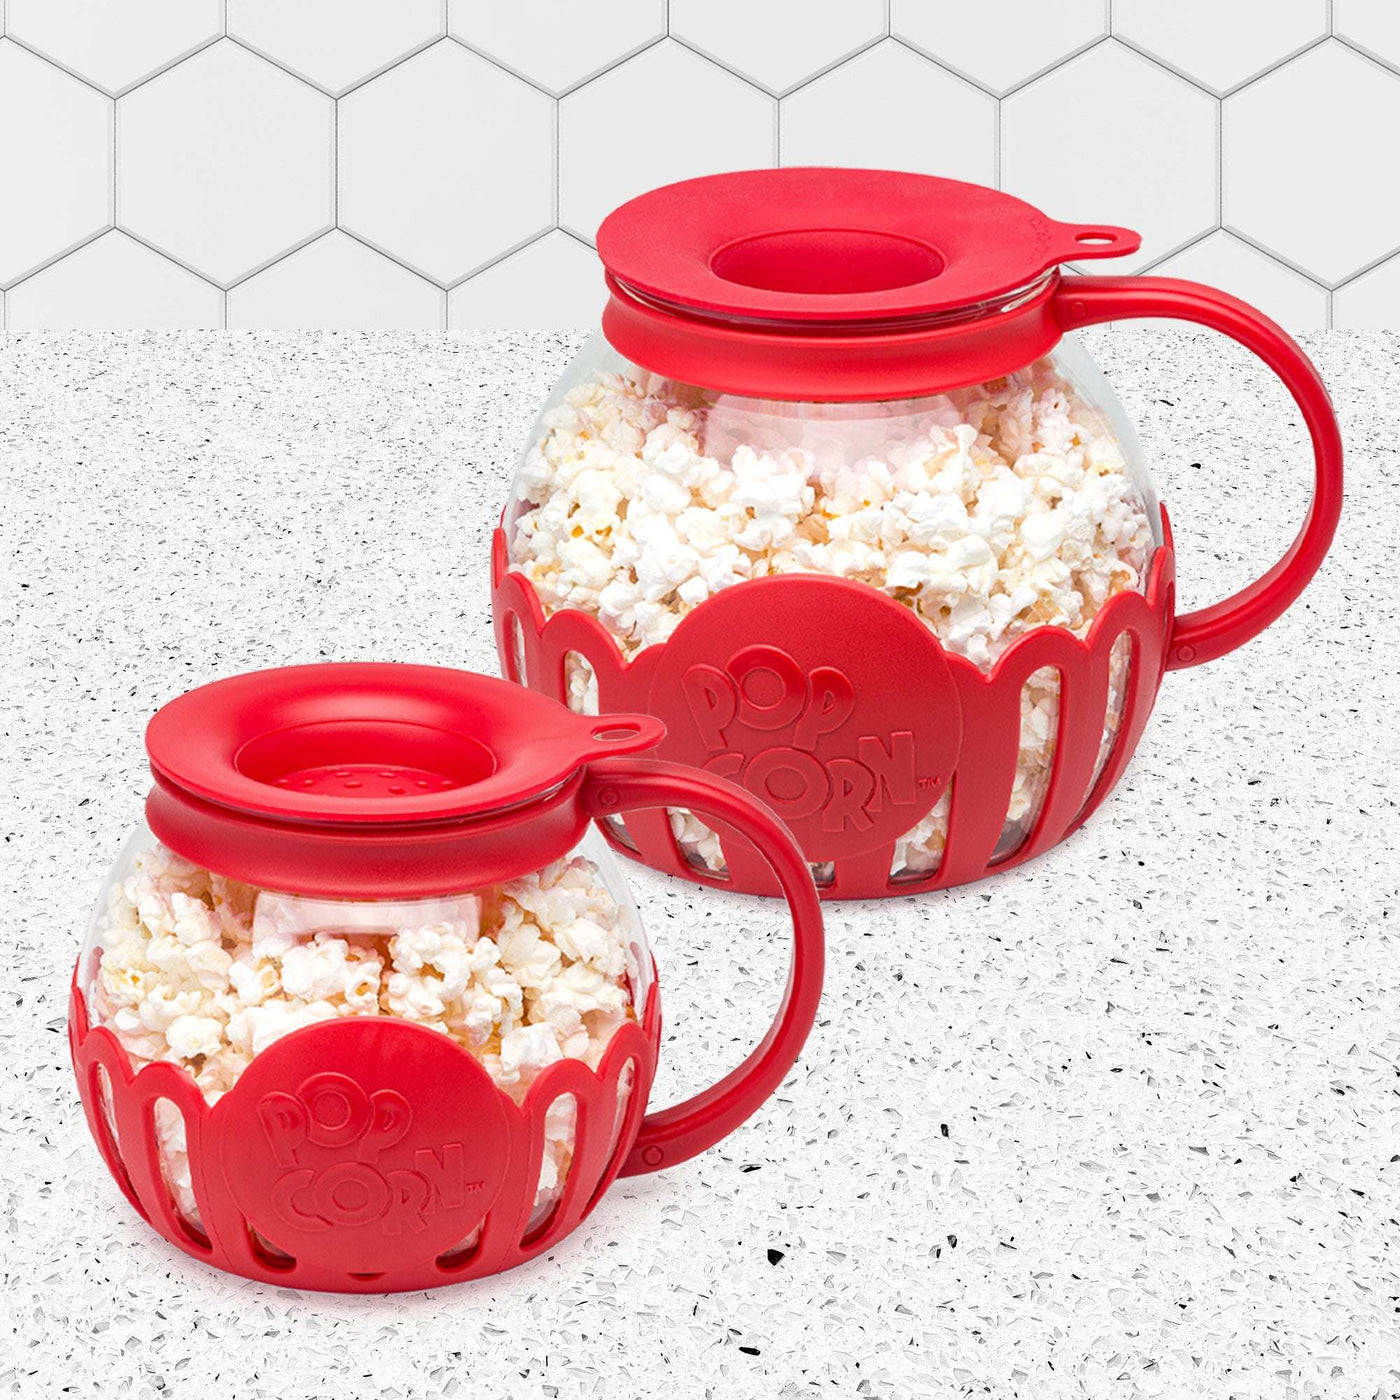 Popcorn Popper Ecolution Micro-pop Popcorn Popper Your Choice